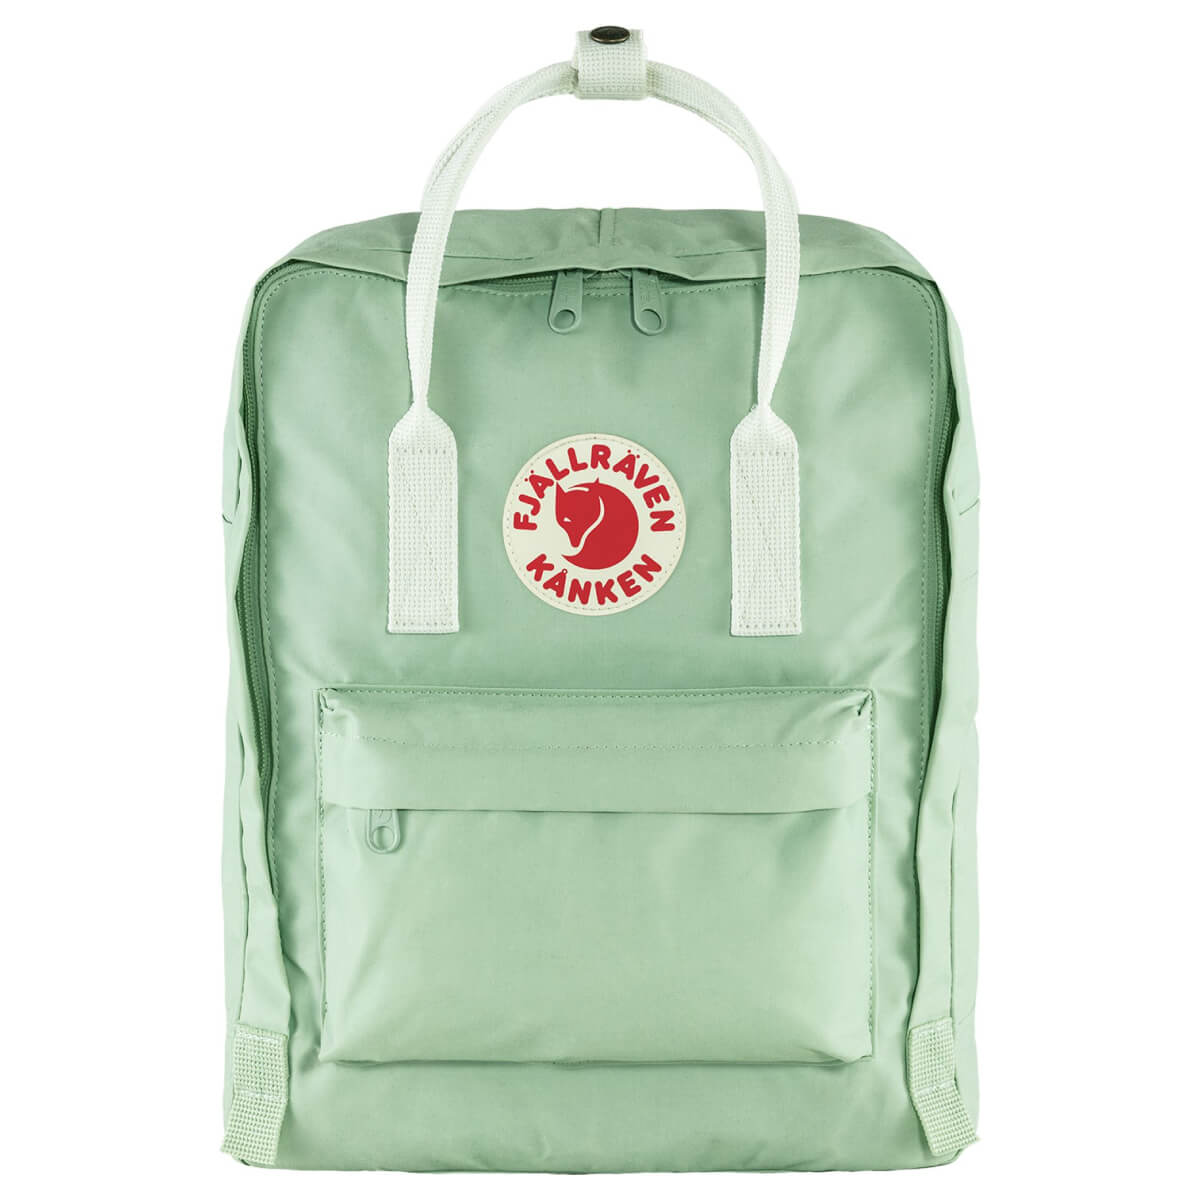 Міський рюкзак Fjallraven Kanken Mint Green/Cool White 16 л 23510.600-106